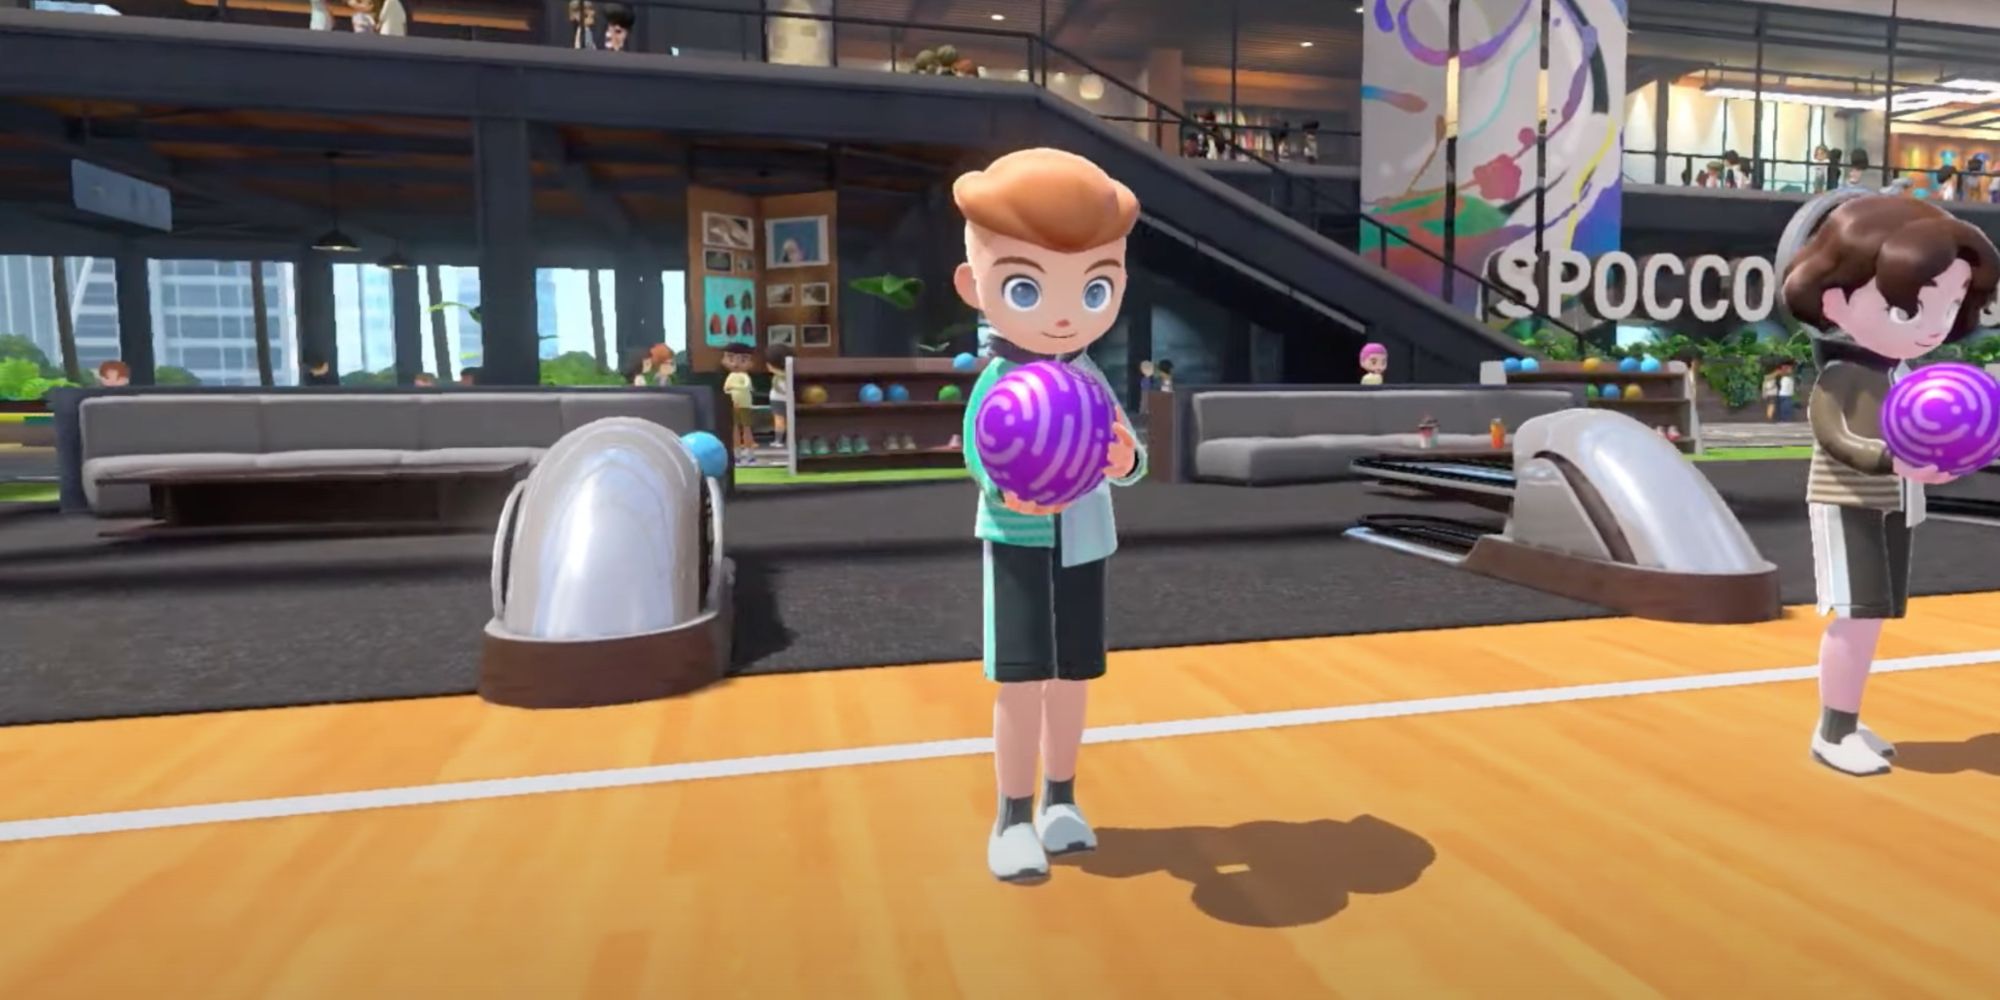 Nintendo doubles the fun in 'Wii Sports Resort